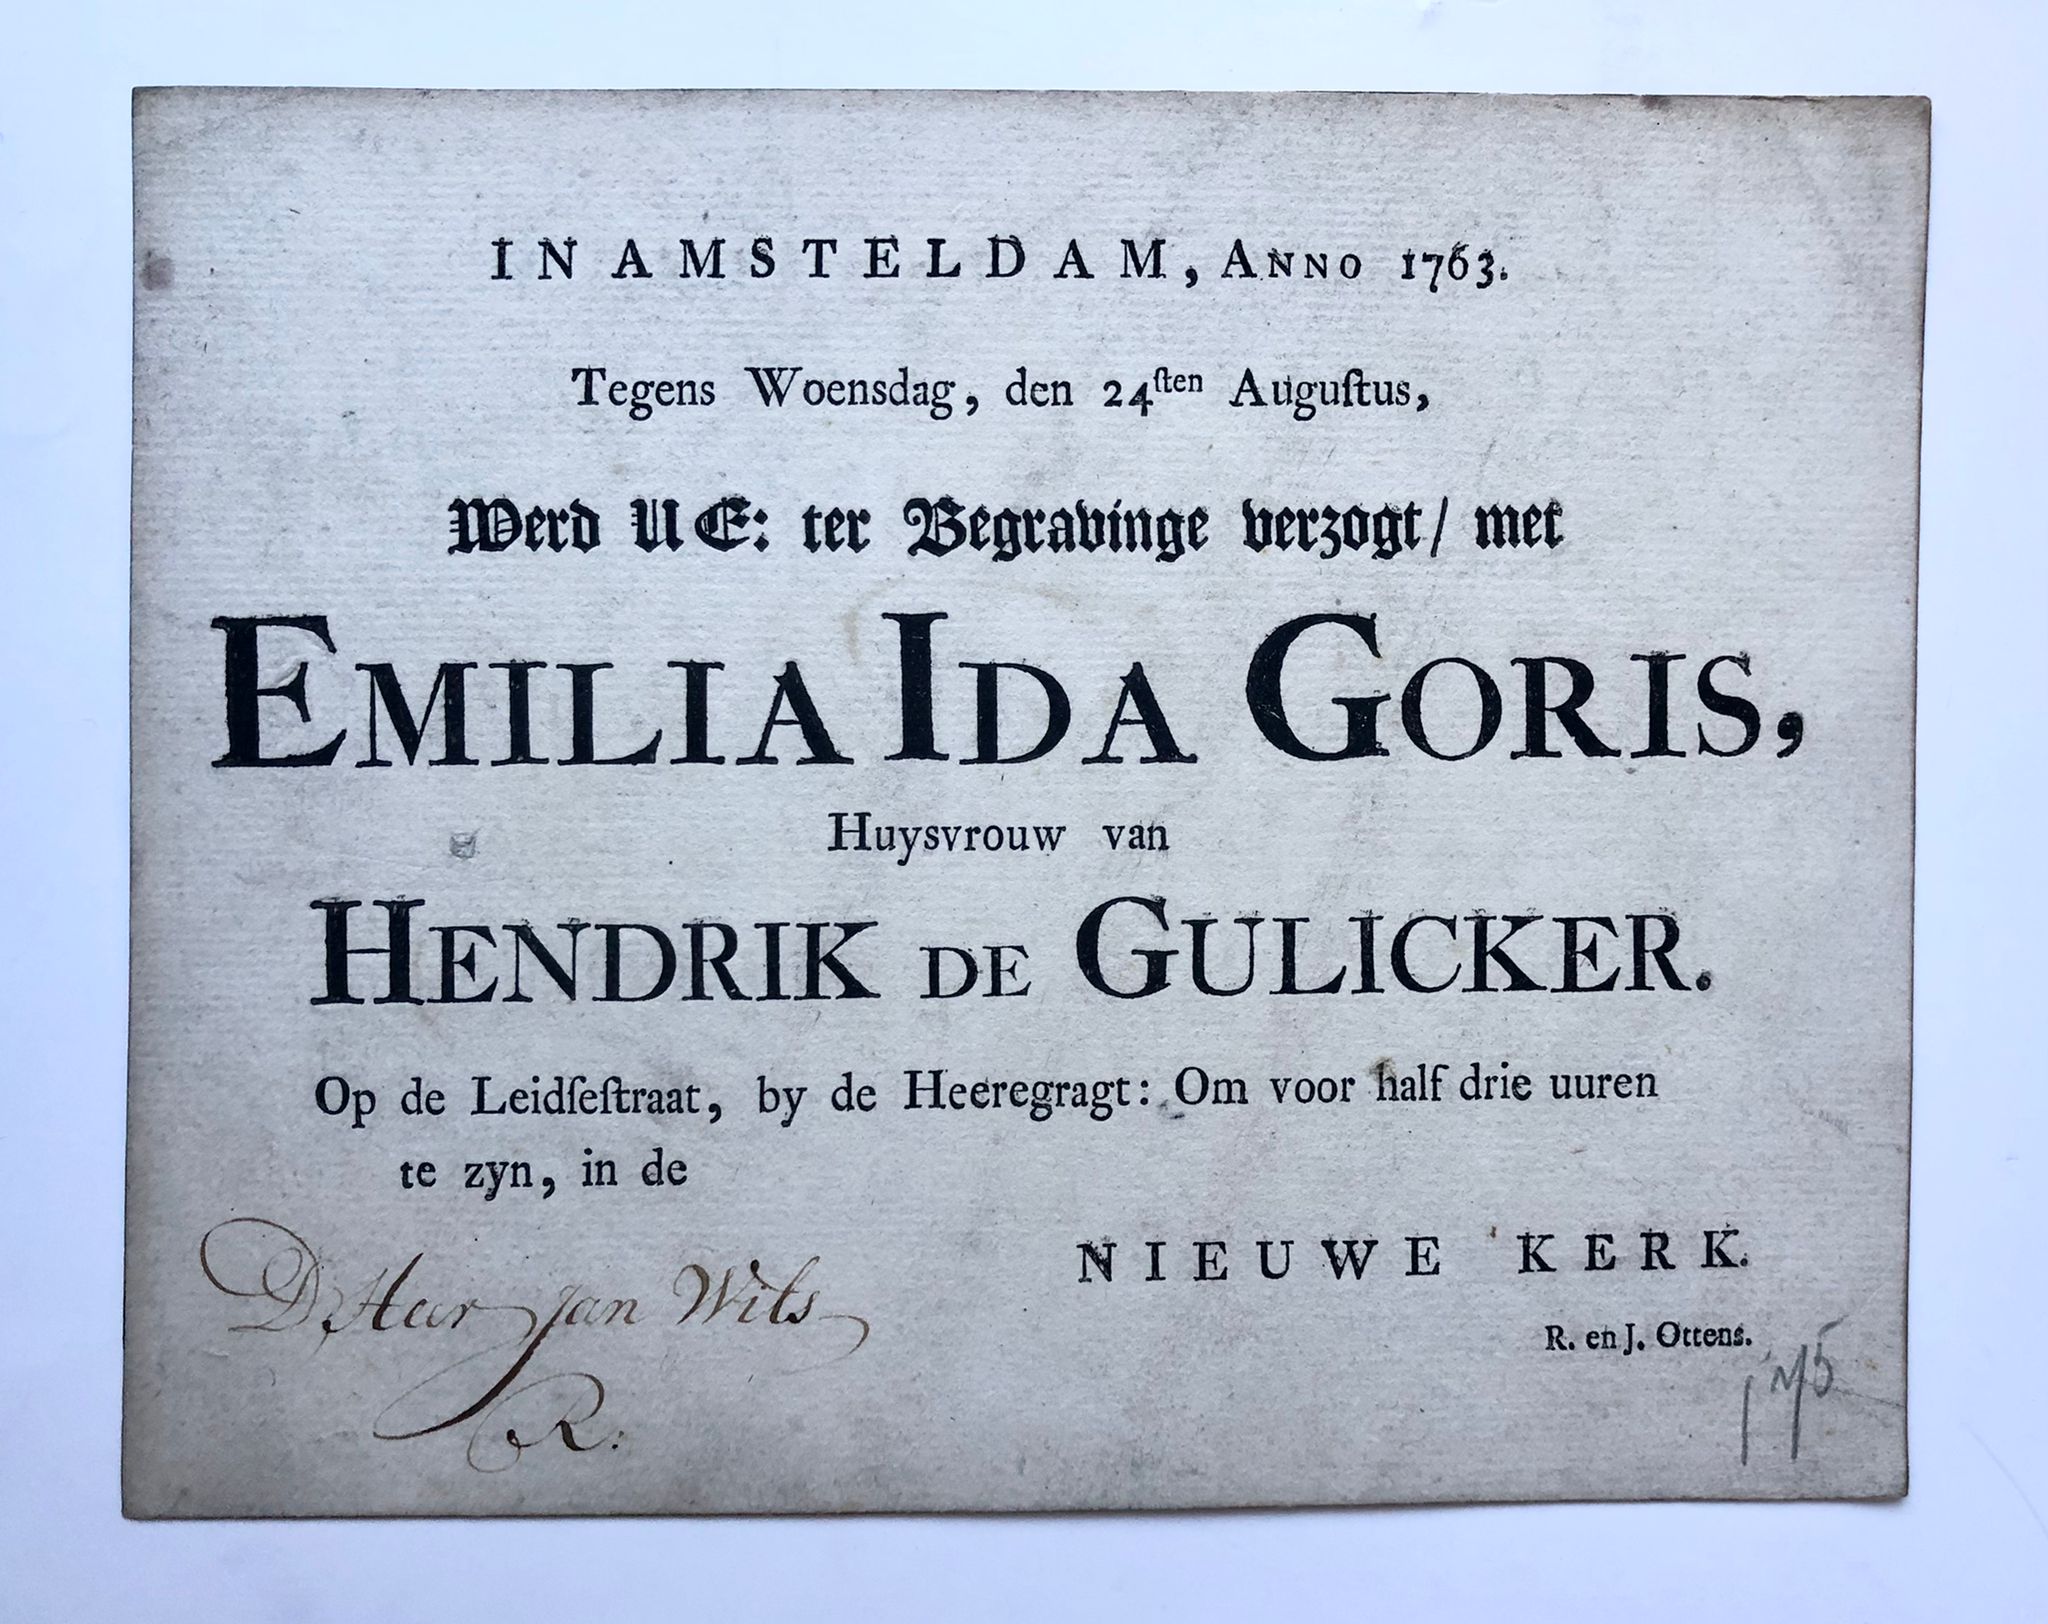 [Printed publication, funeral, 1763] Invitation for the funeral of Emilia Ida Goris, housewife of Hendrik de Gulicker, Nieuwe Kerk Amsterdam 24-8-1763. 4° oblong, 1 p., printed publication.